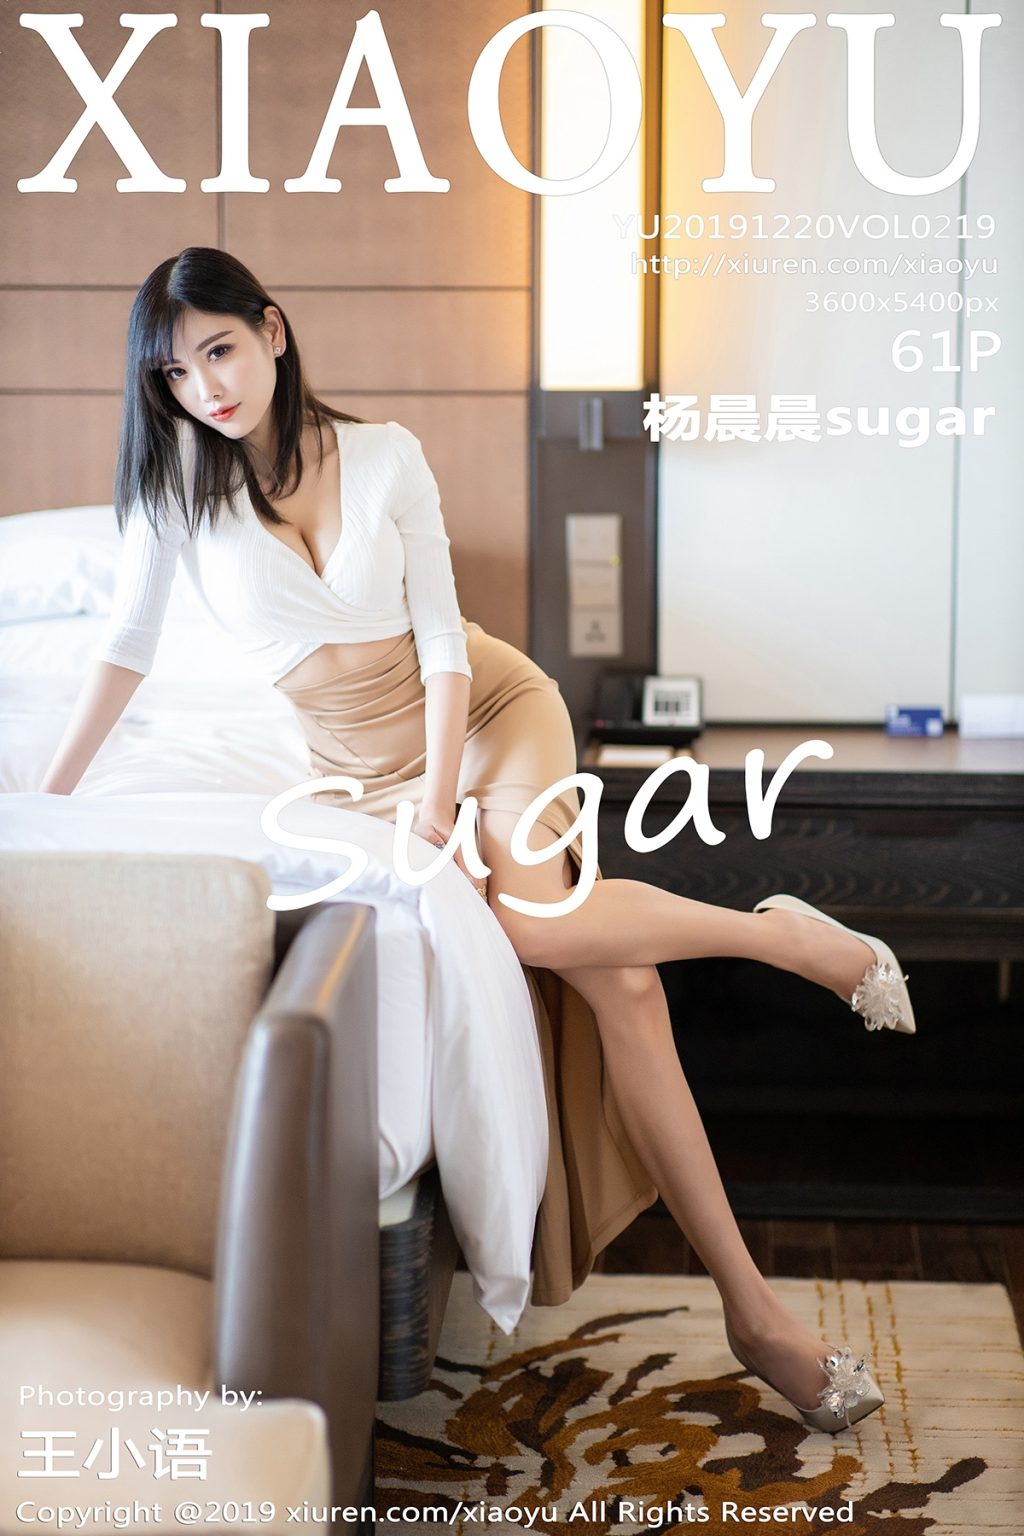 Watch sexy XiaoYu Vol.219: Yang Chen Chen (杨晨晨sugar) photos